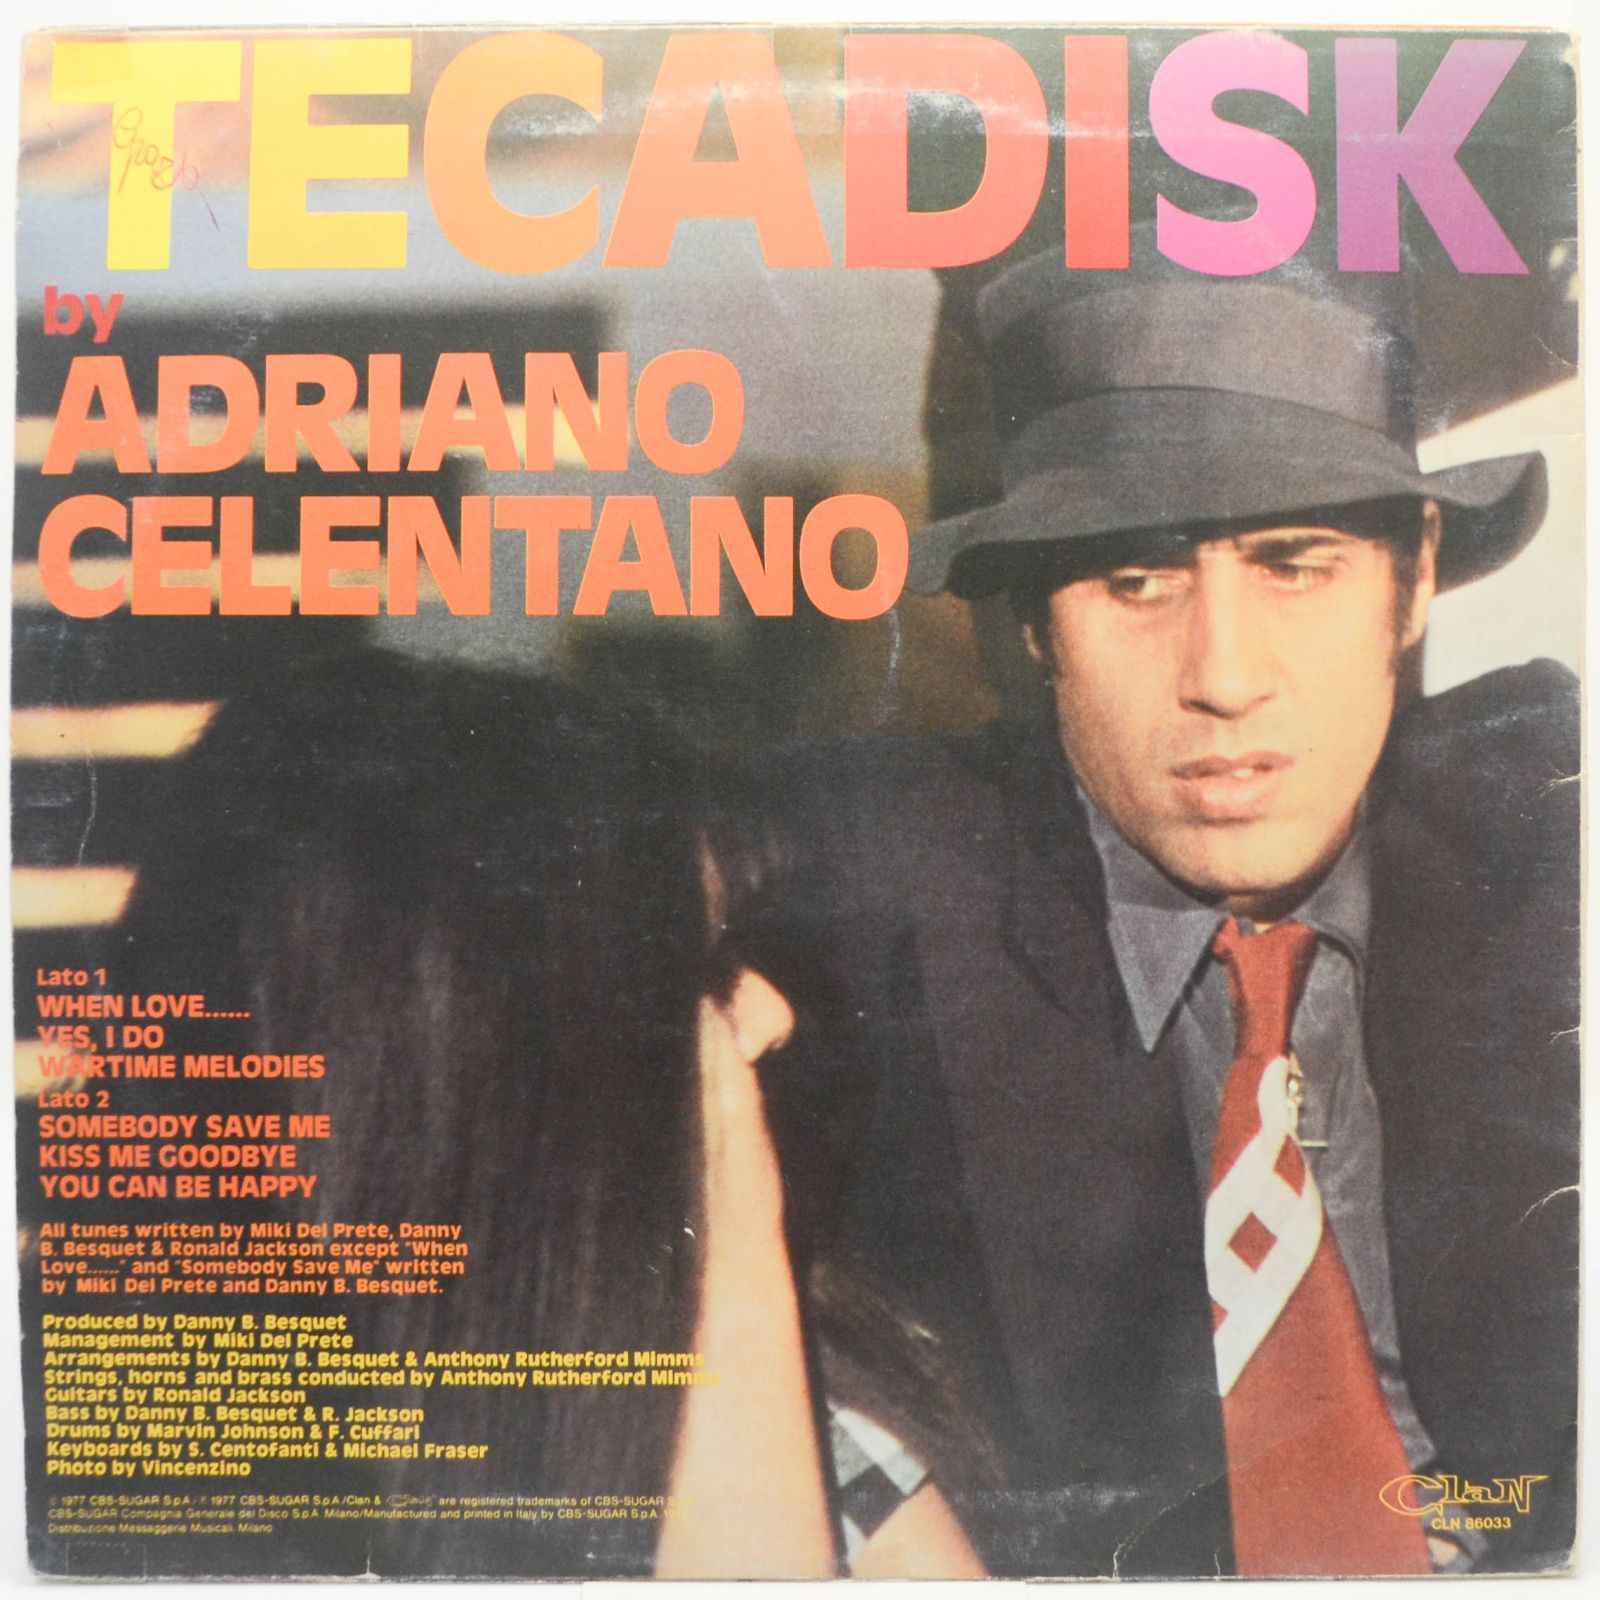 Adriano Celentano — Tecadisk, 1977